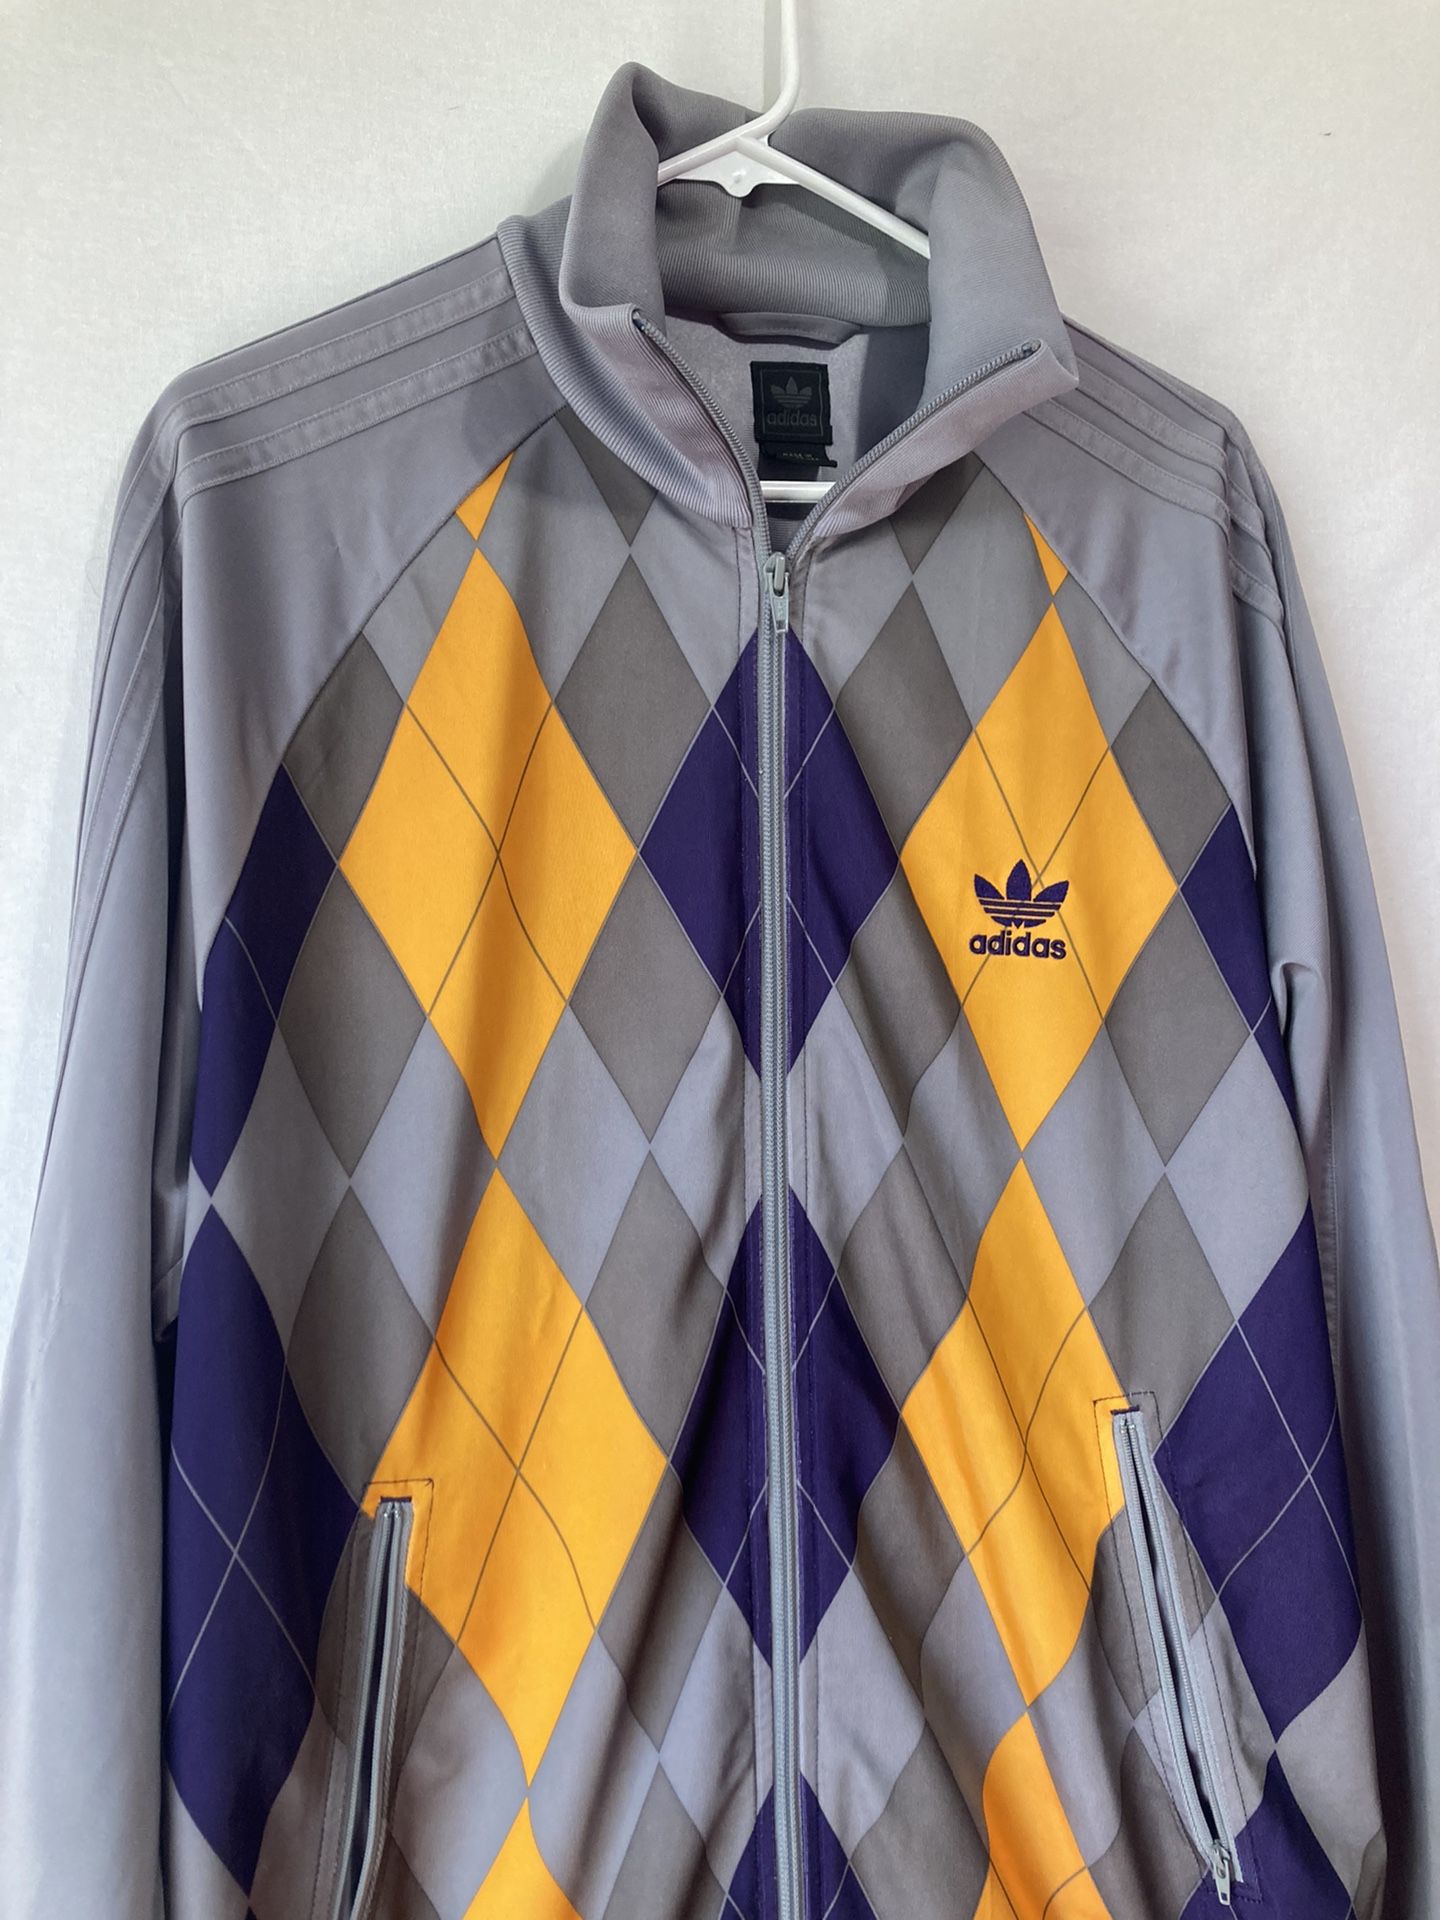 07 Adidas Originals Argyle Track Jacket RARE Zip Large Striped Sleeve Multicolor